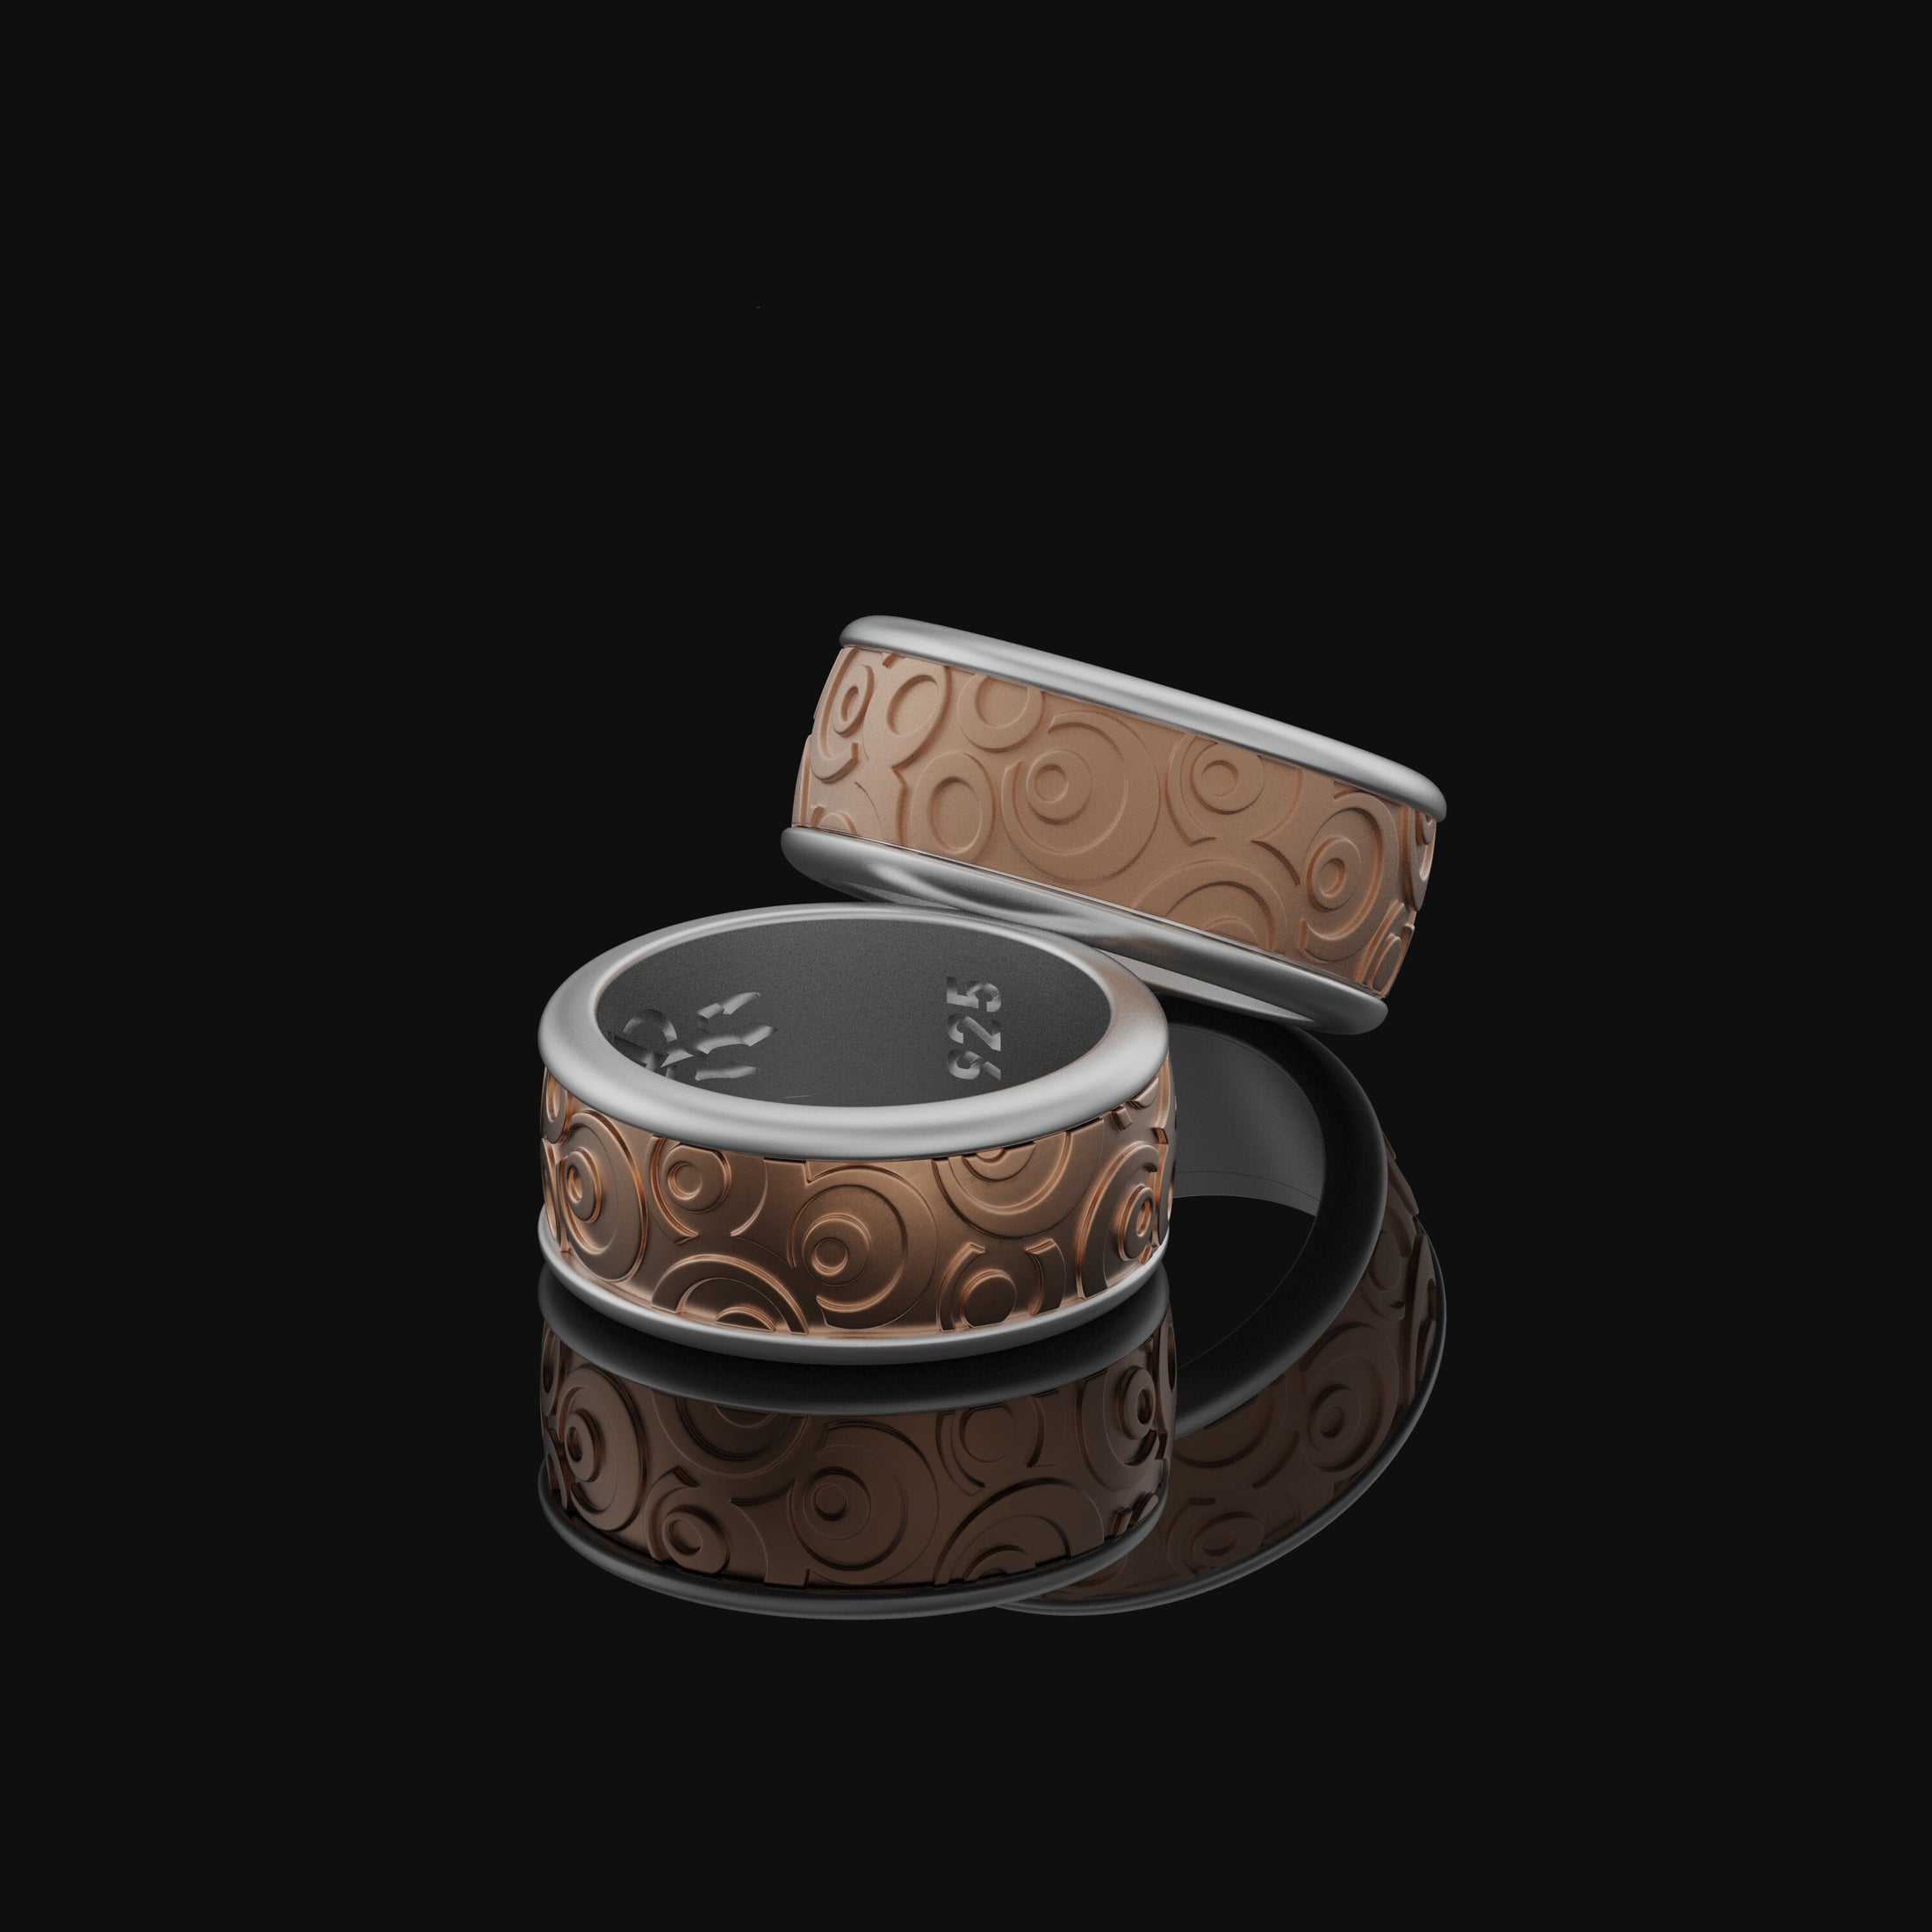 Rotating Circular Design Ring - Silver Circle Pattern Band, Modern Geometric Spin, Elegant and Sleek Jewelry